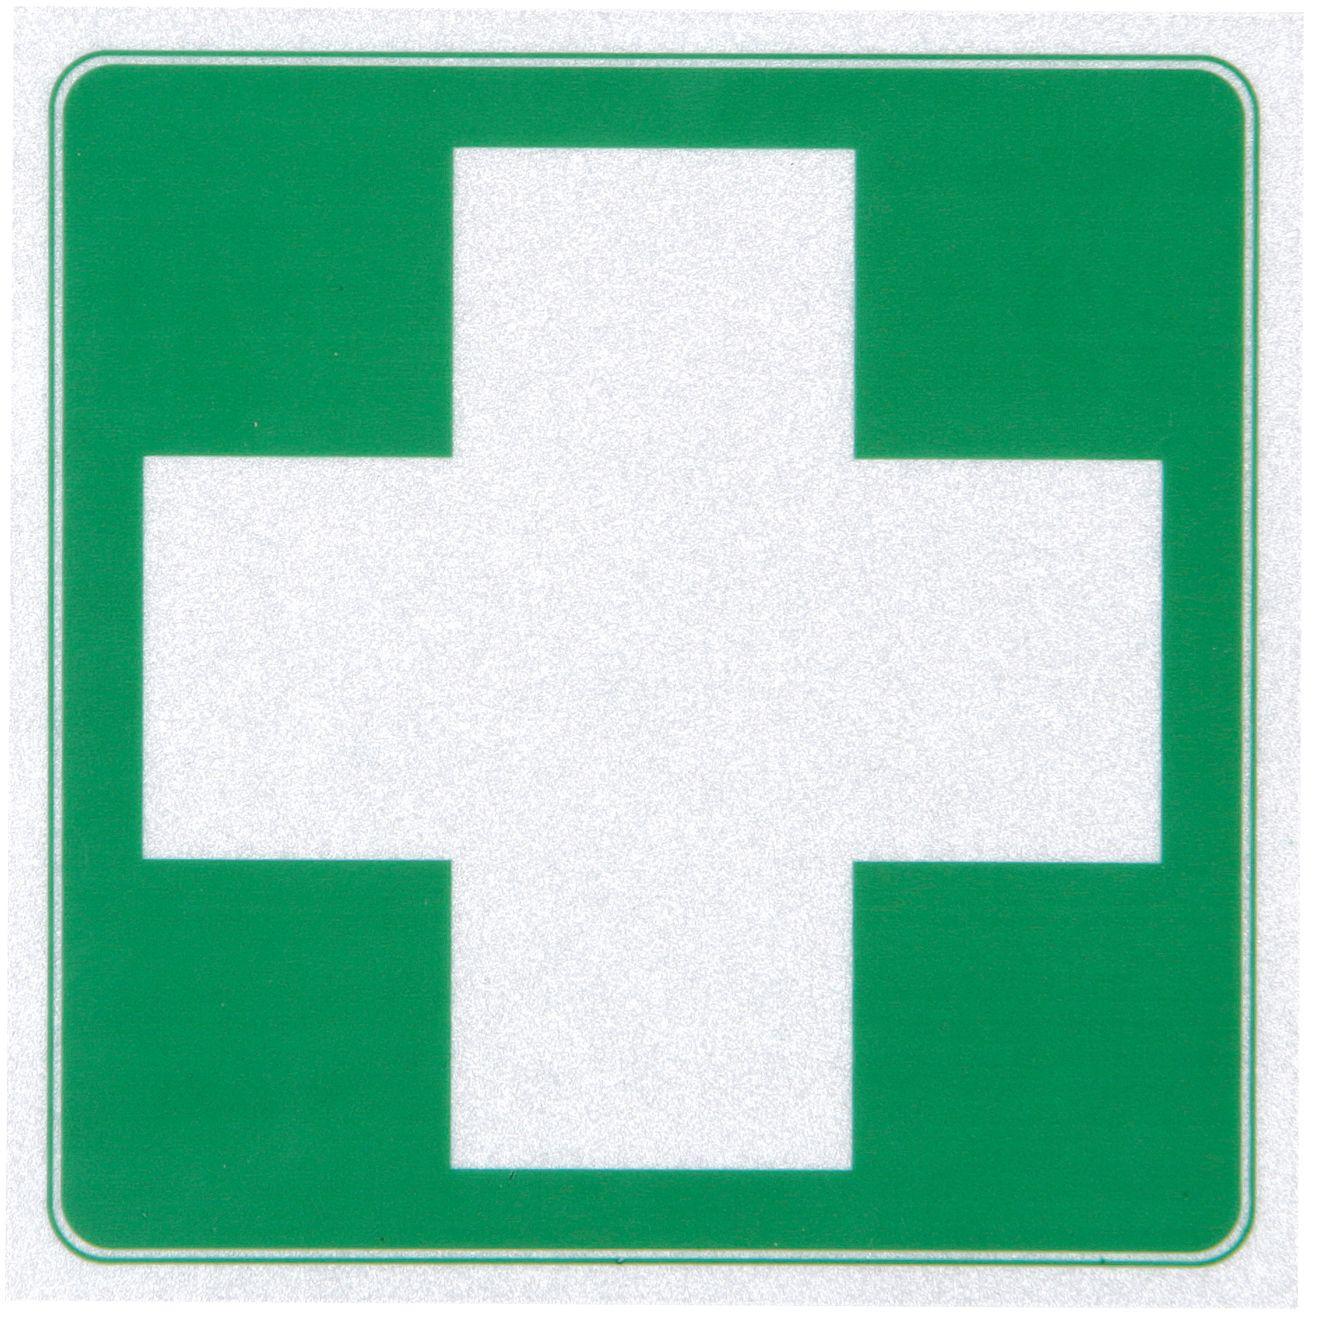 White and Green Square Logo - Reflective Green & White Cross 84 x 84mm. St John NSW